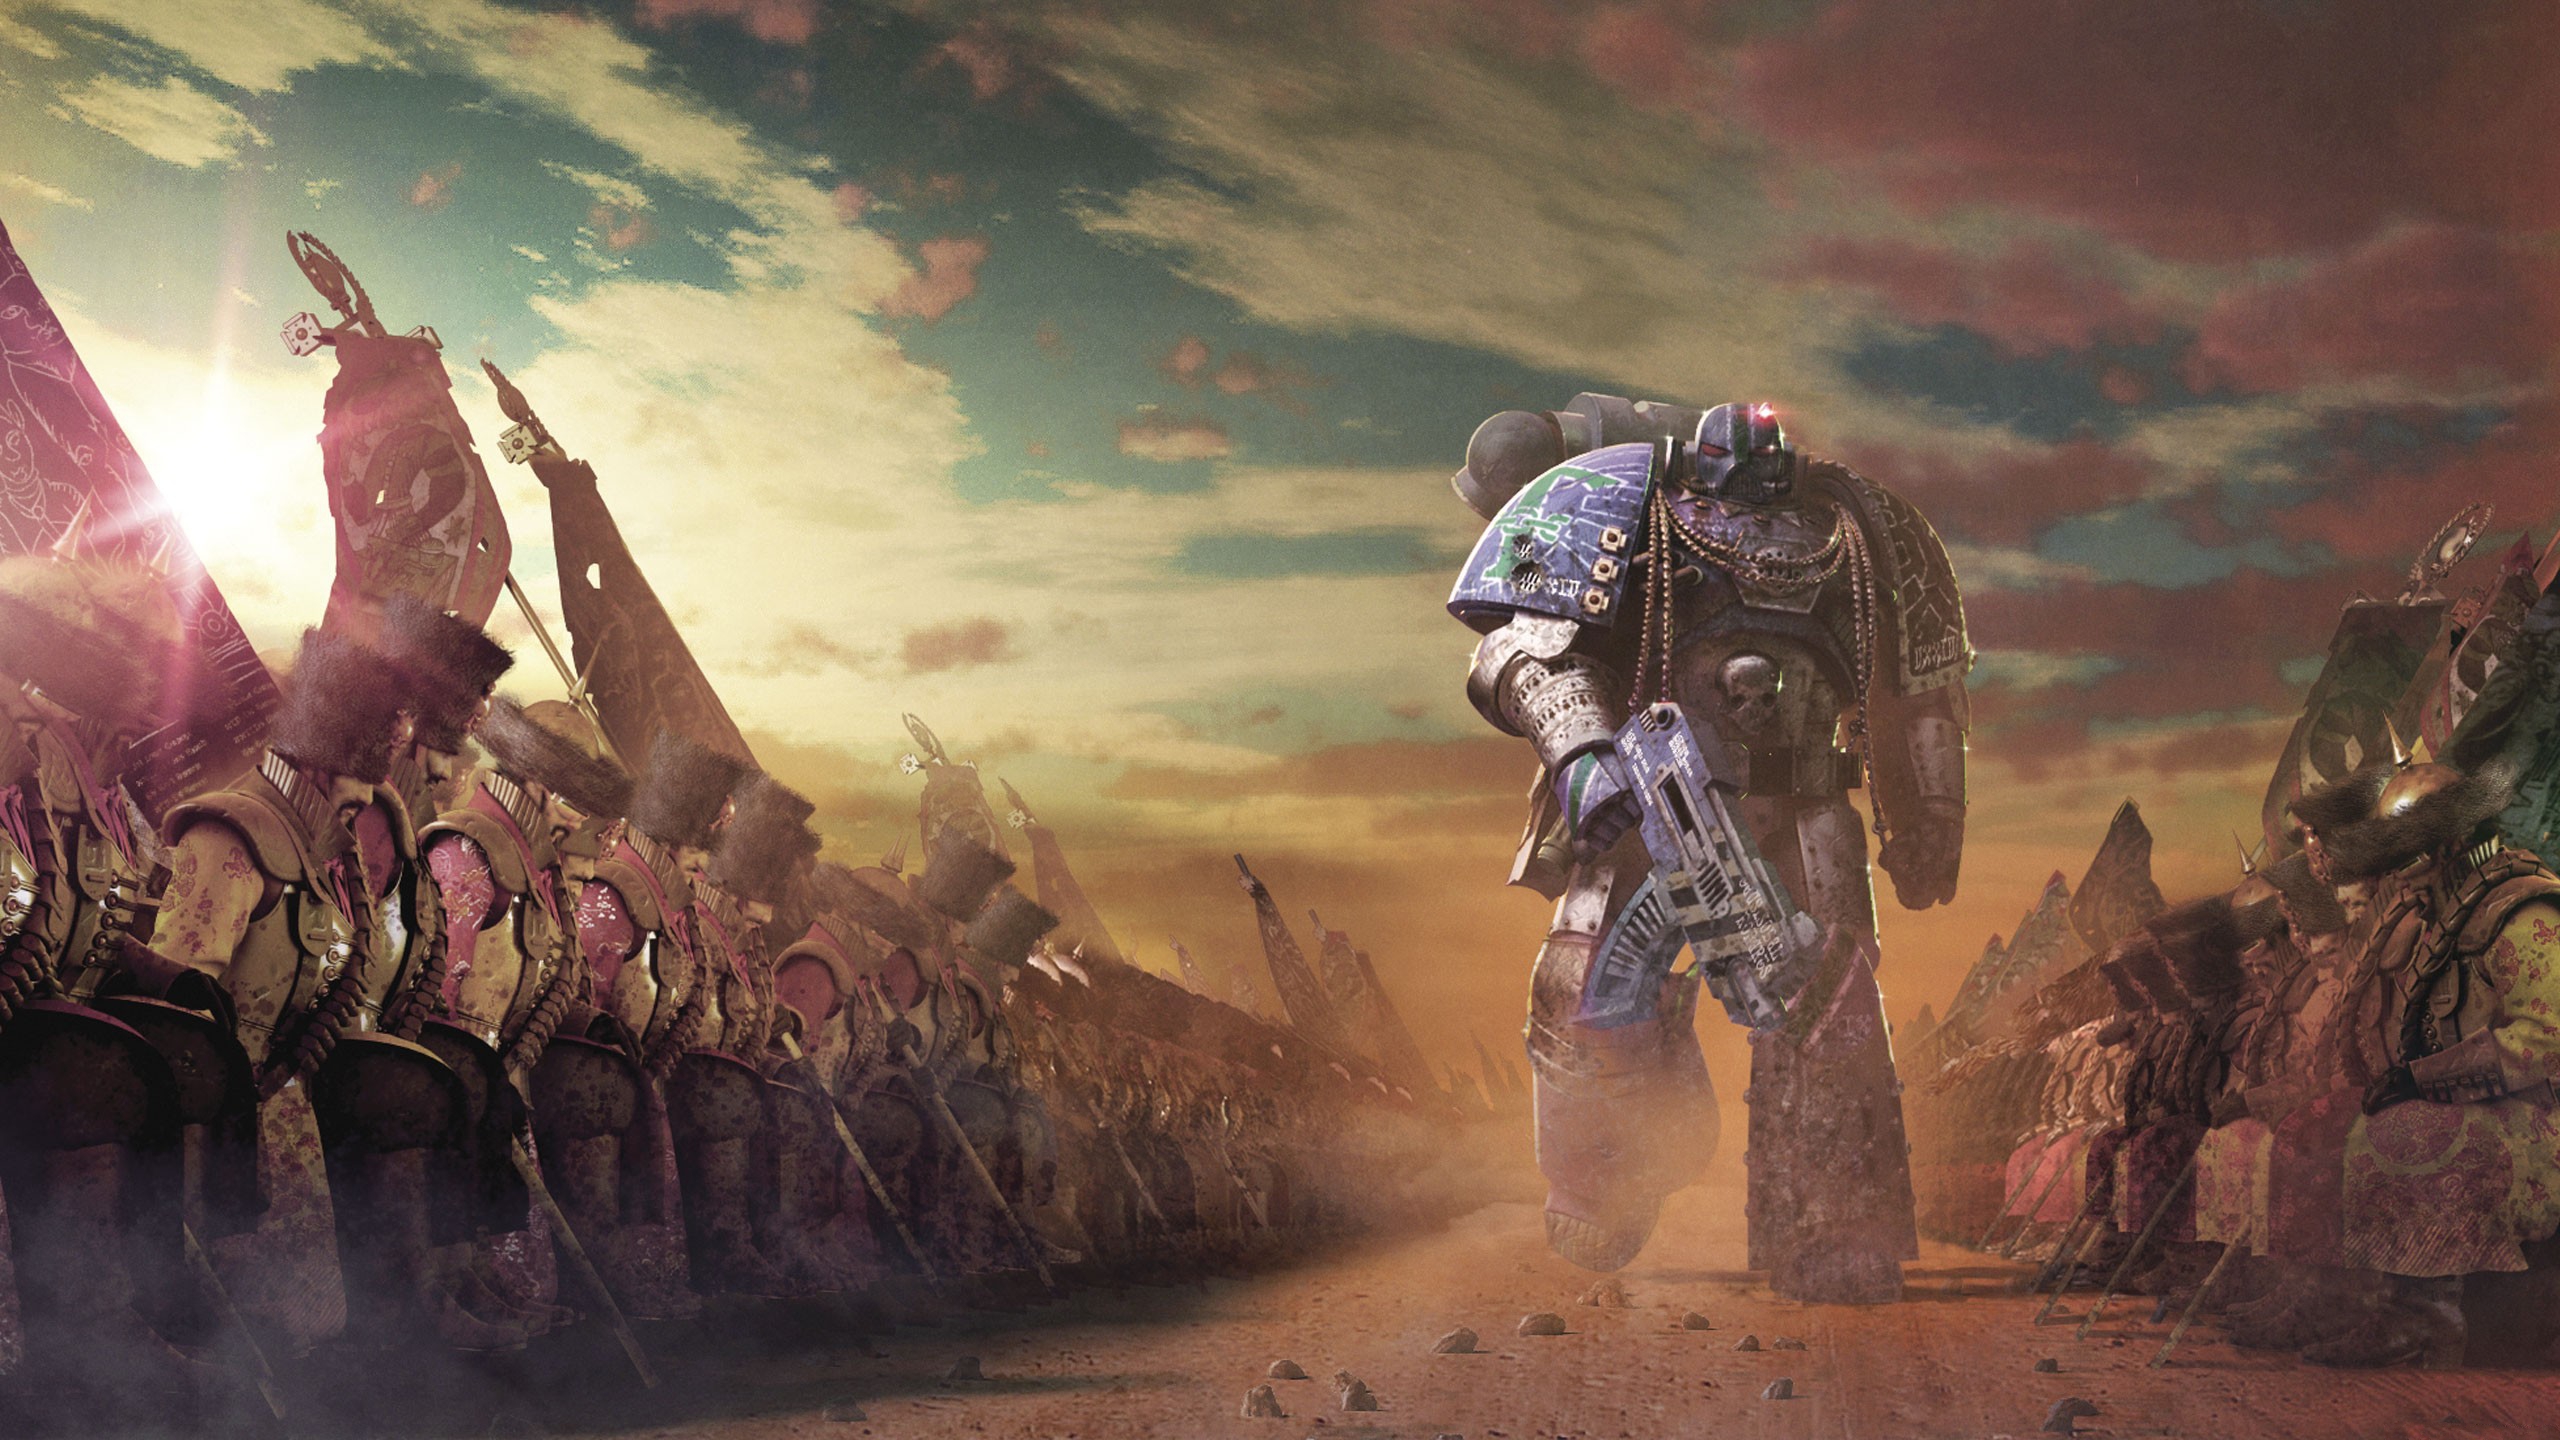 General 2560x1440 Warhammer 40,000 space marines Horus Heresy artwork digital art futuristic science fiction fantasy art Alpha Legion